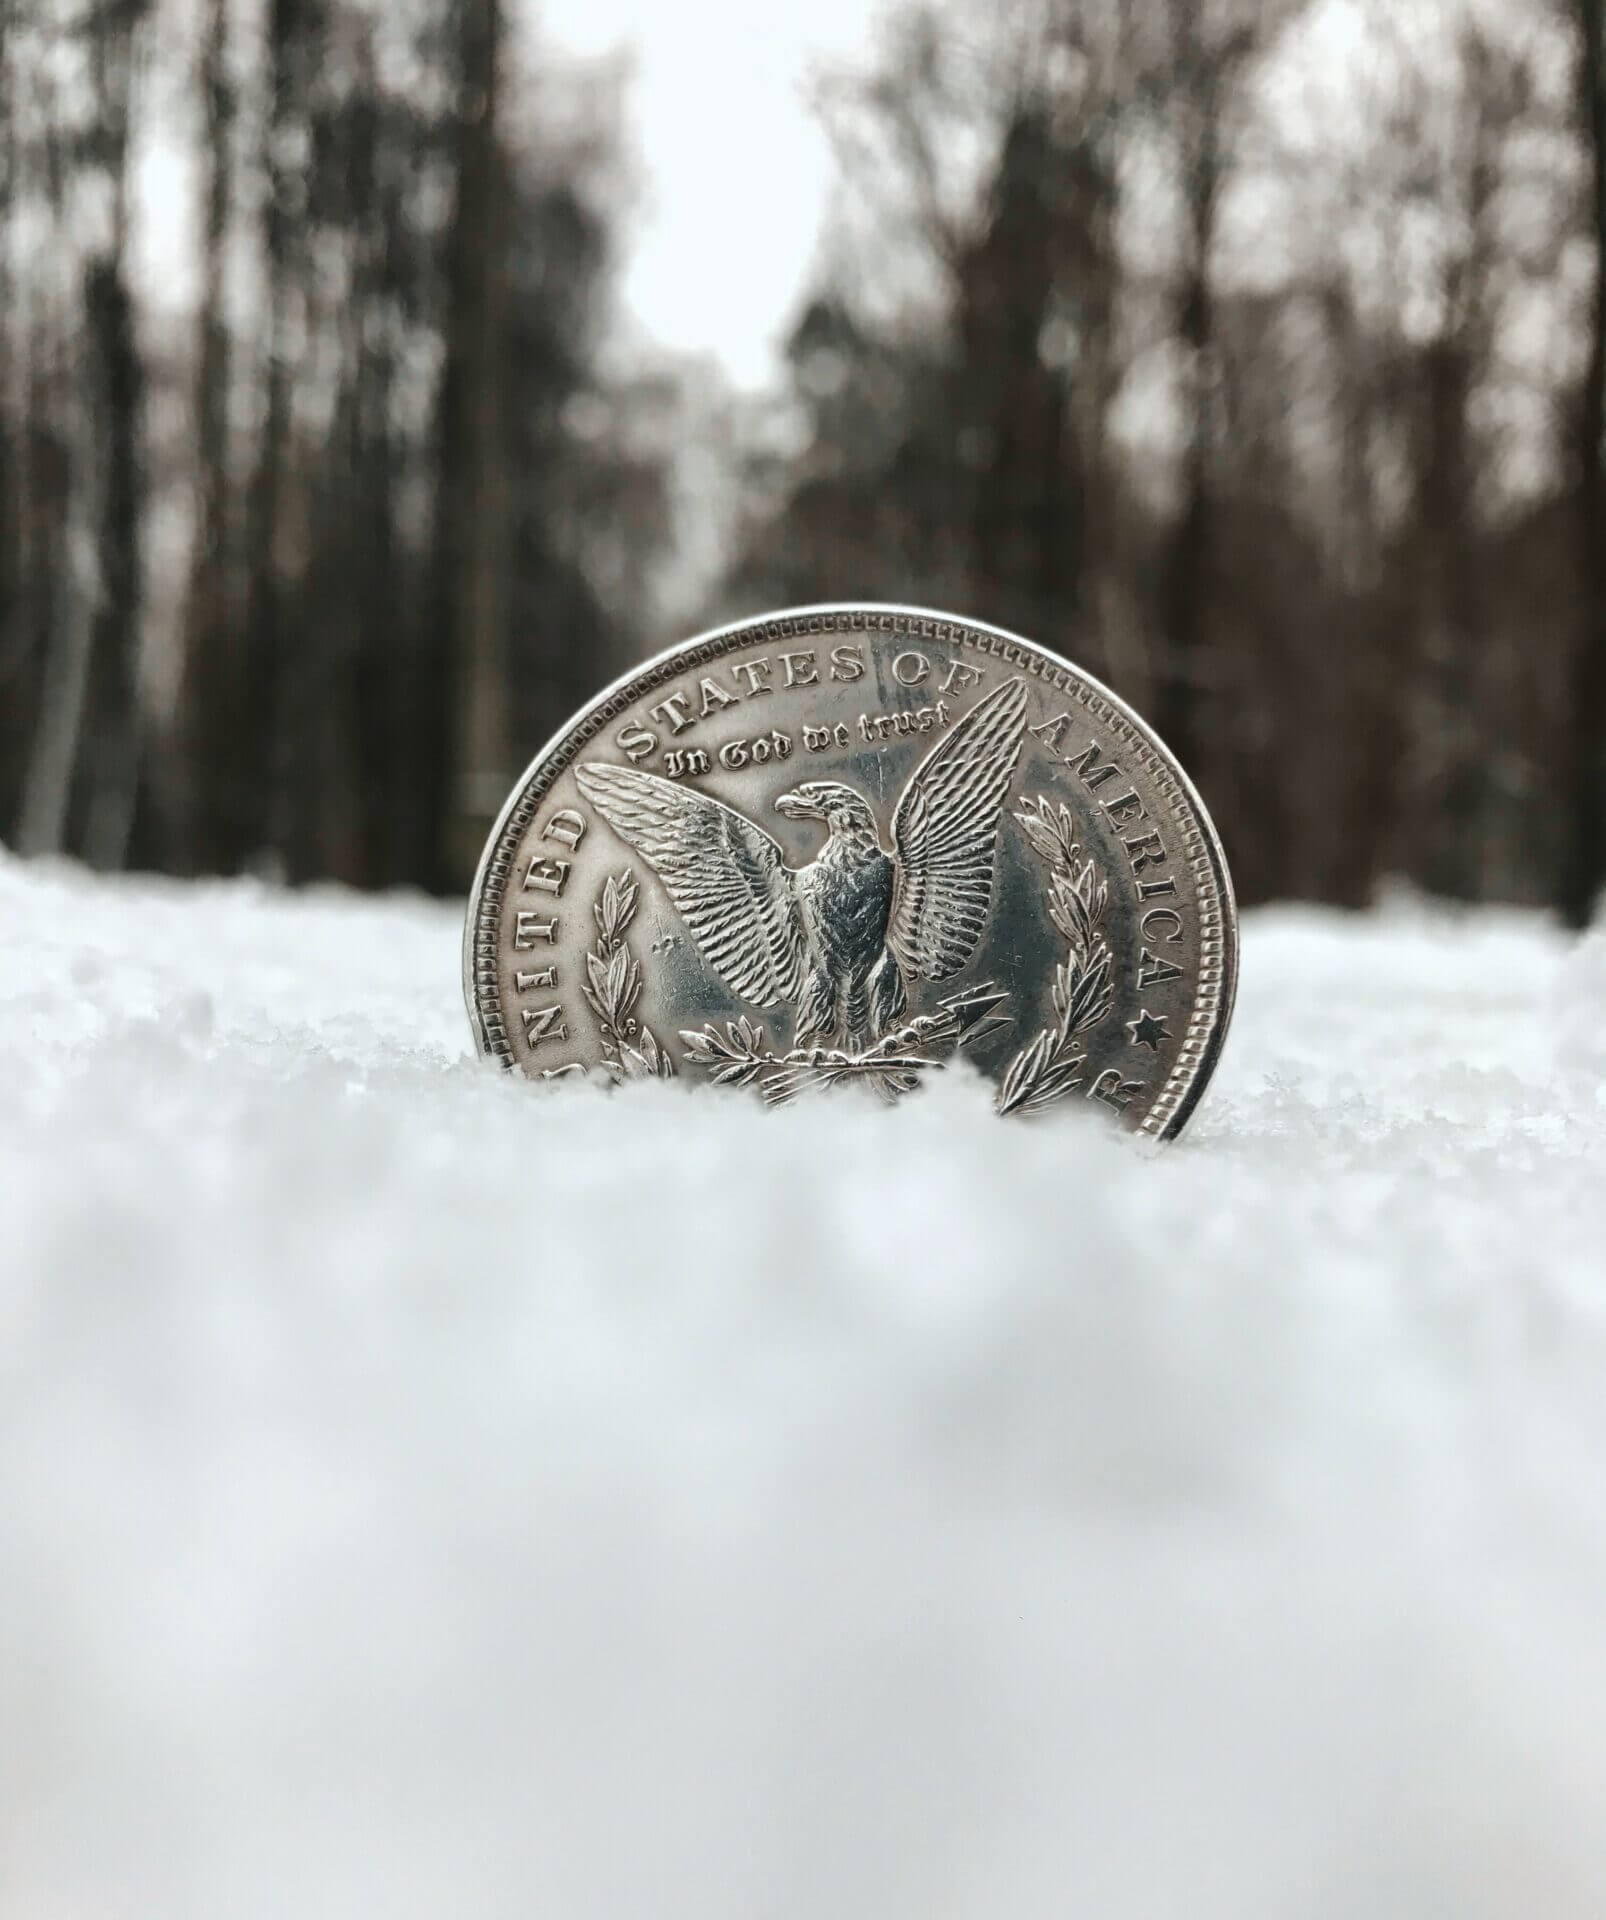 US quarter in the snow.